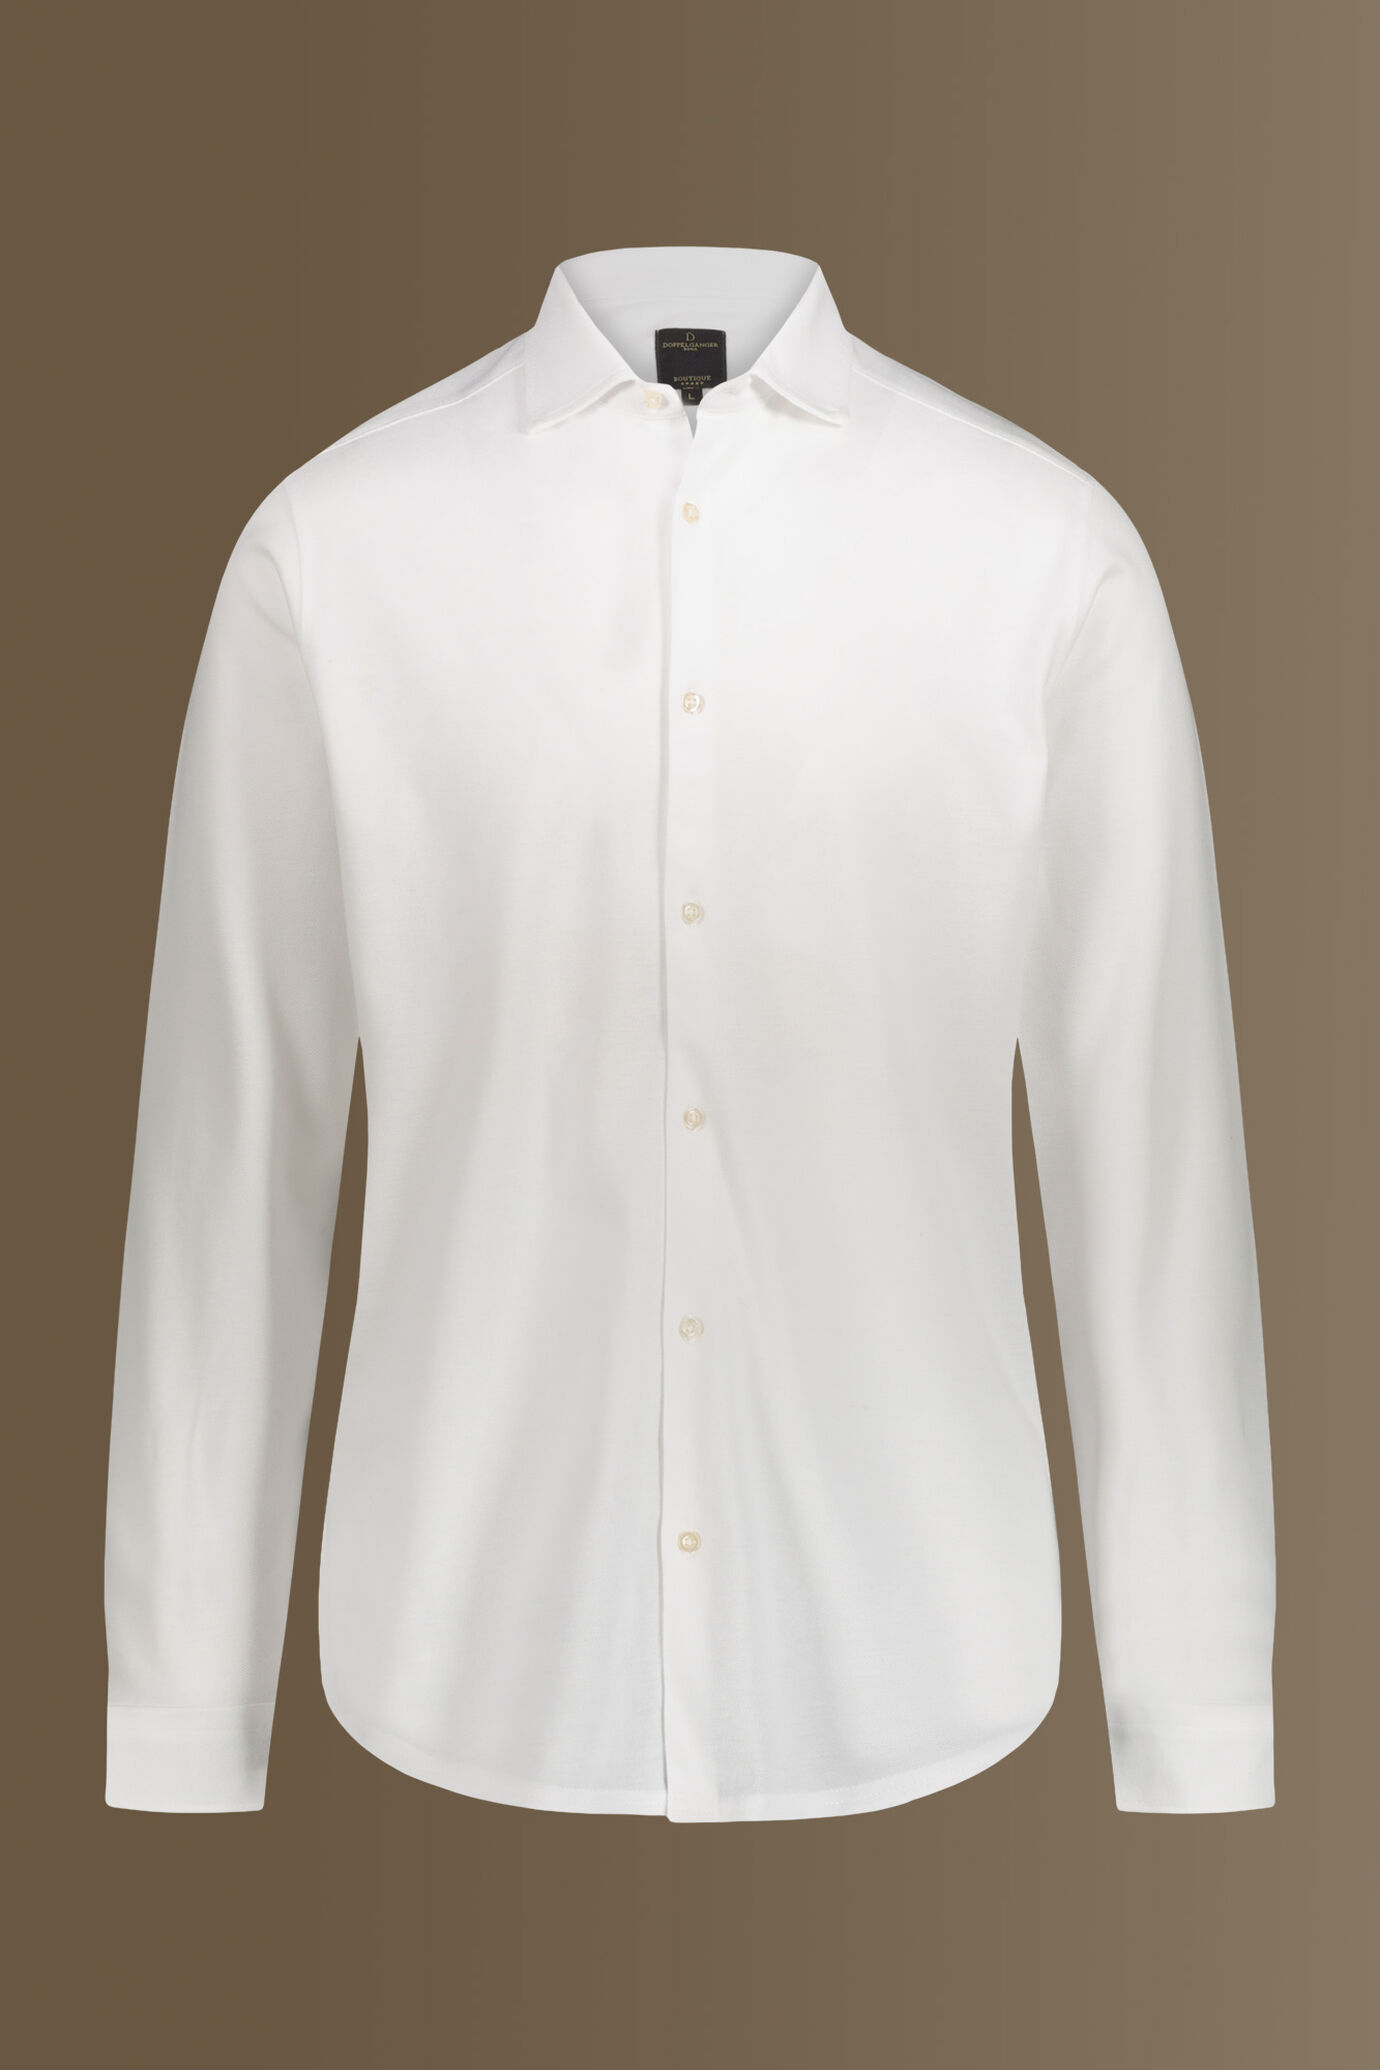 Polo shirt long sleeves 100% cotton piquet solid colour